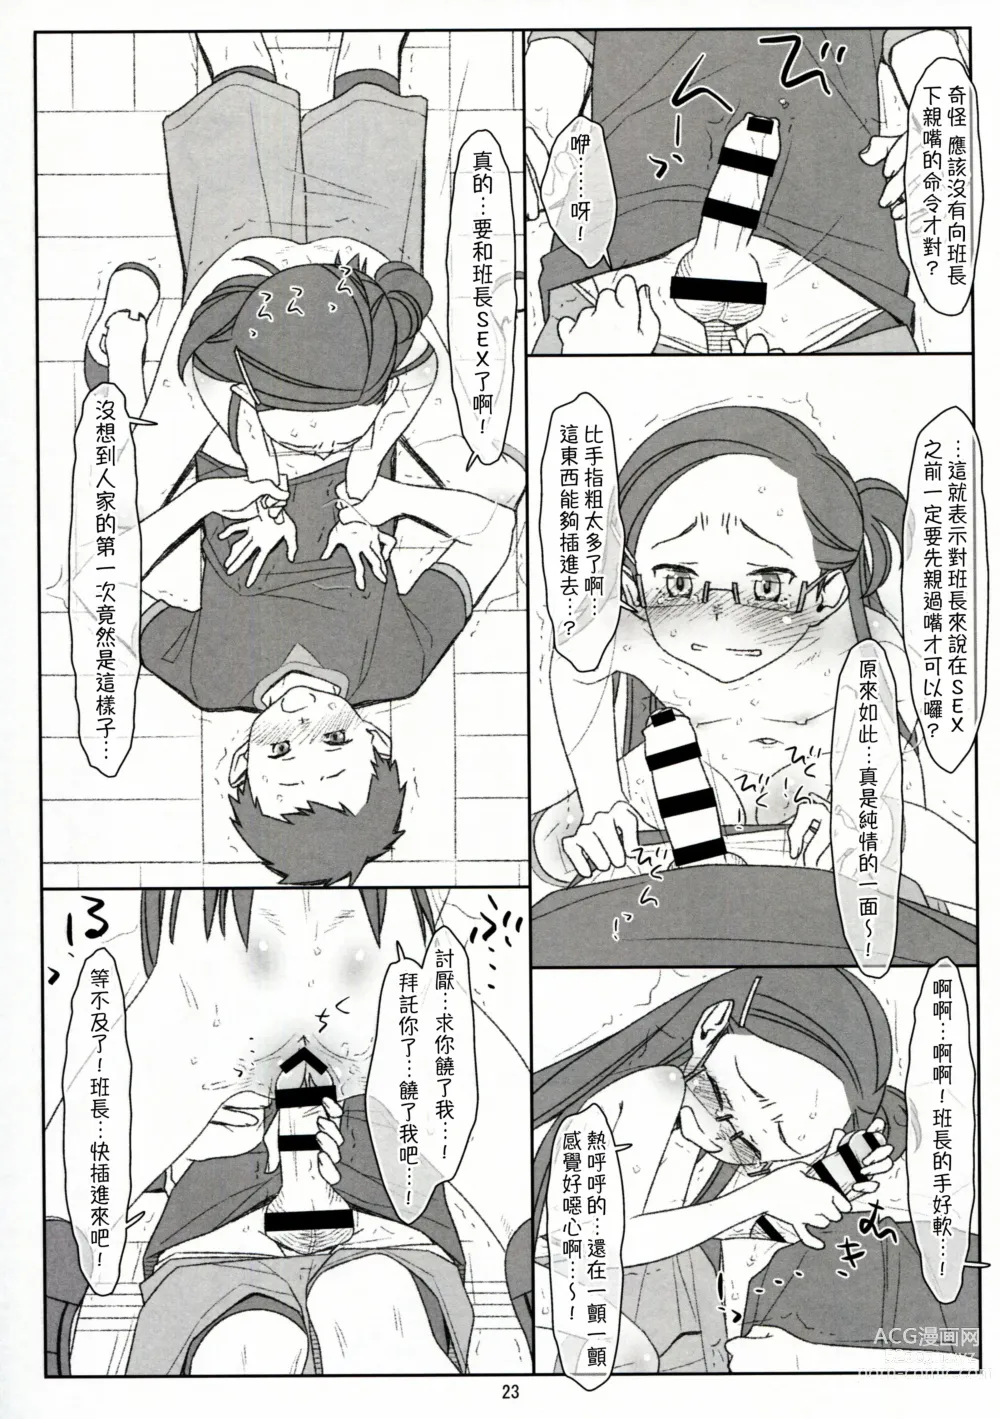 Page 23 of doujinshi Bokutachi no Super App + ②